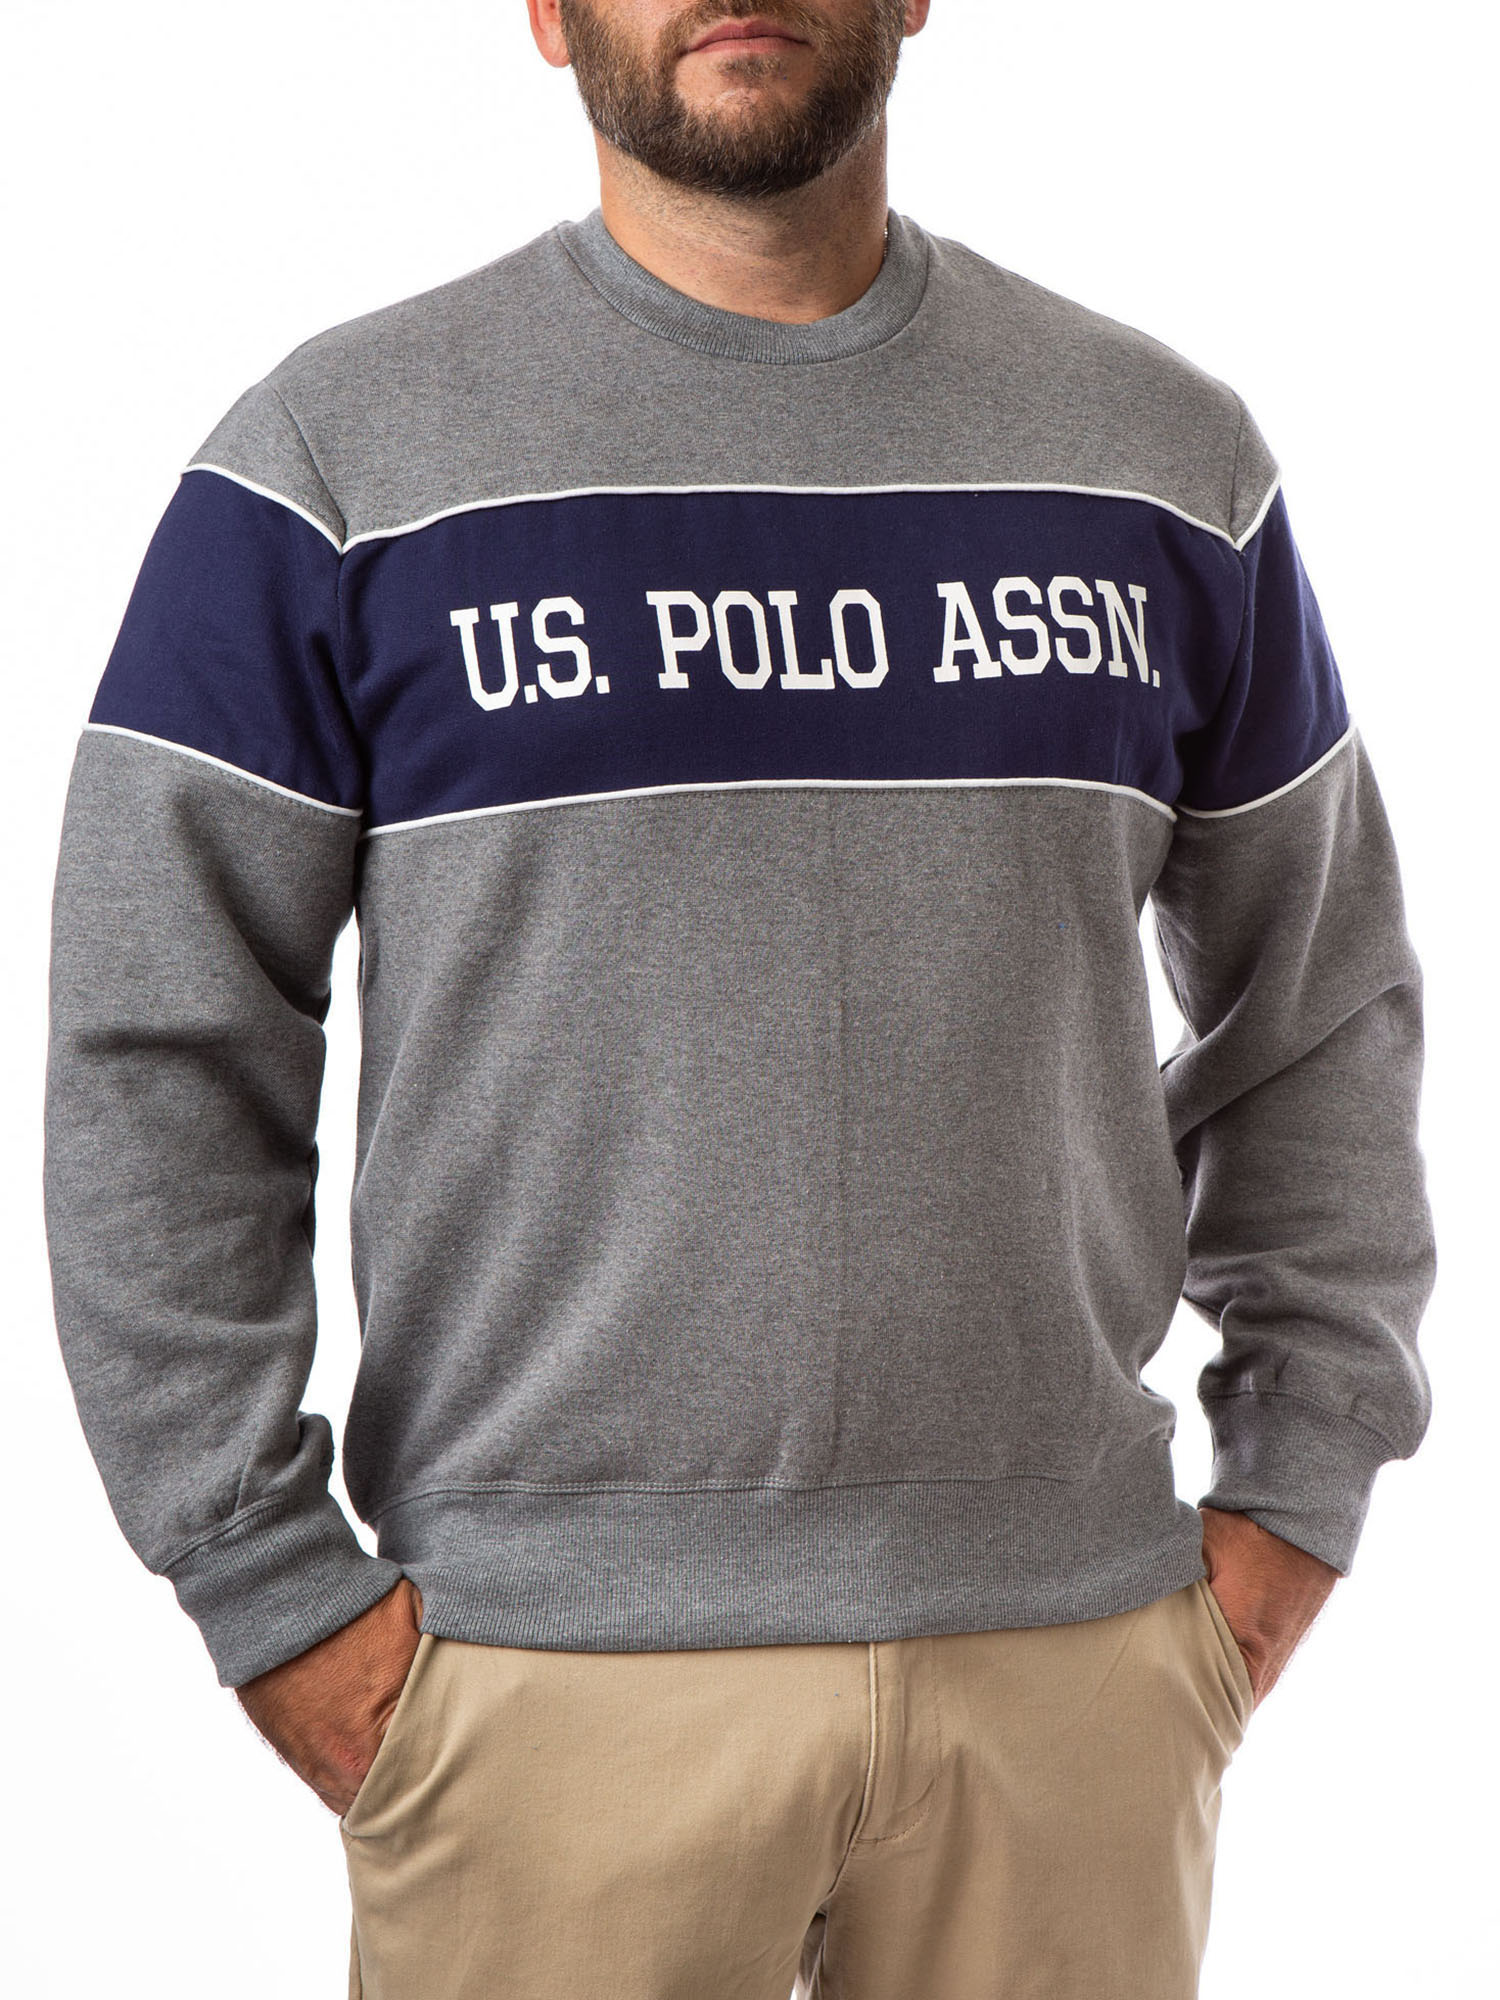 U.S. Polo Assn. Men's Colorblock Pullover - image 1 of 2